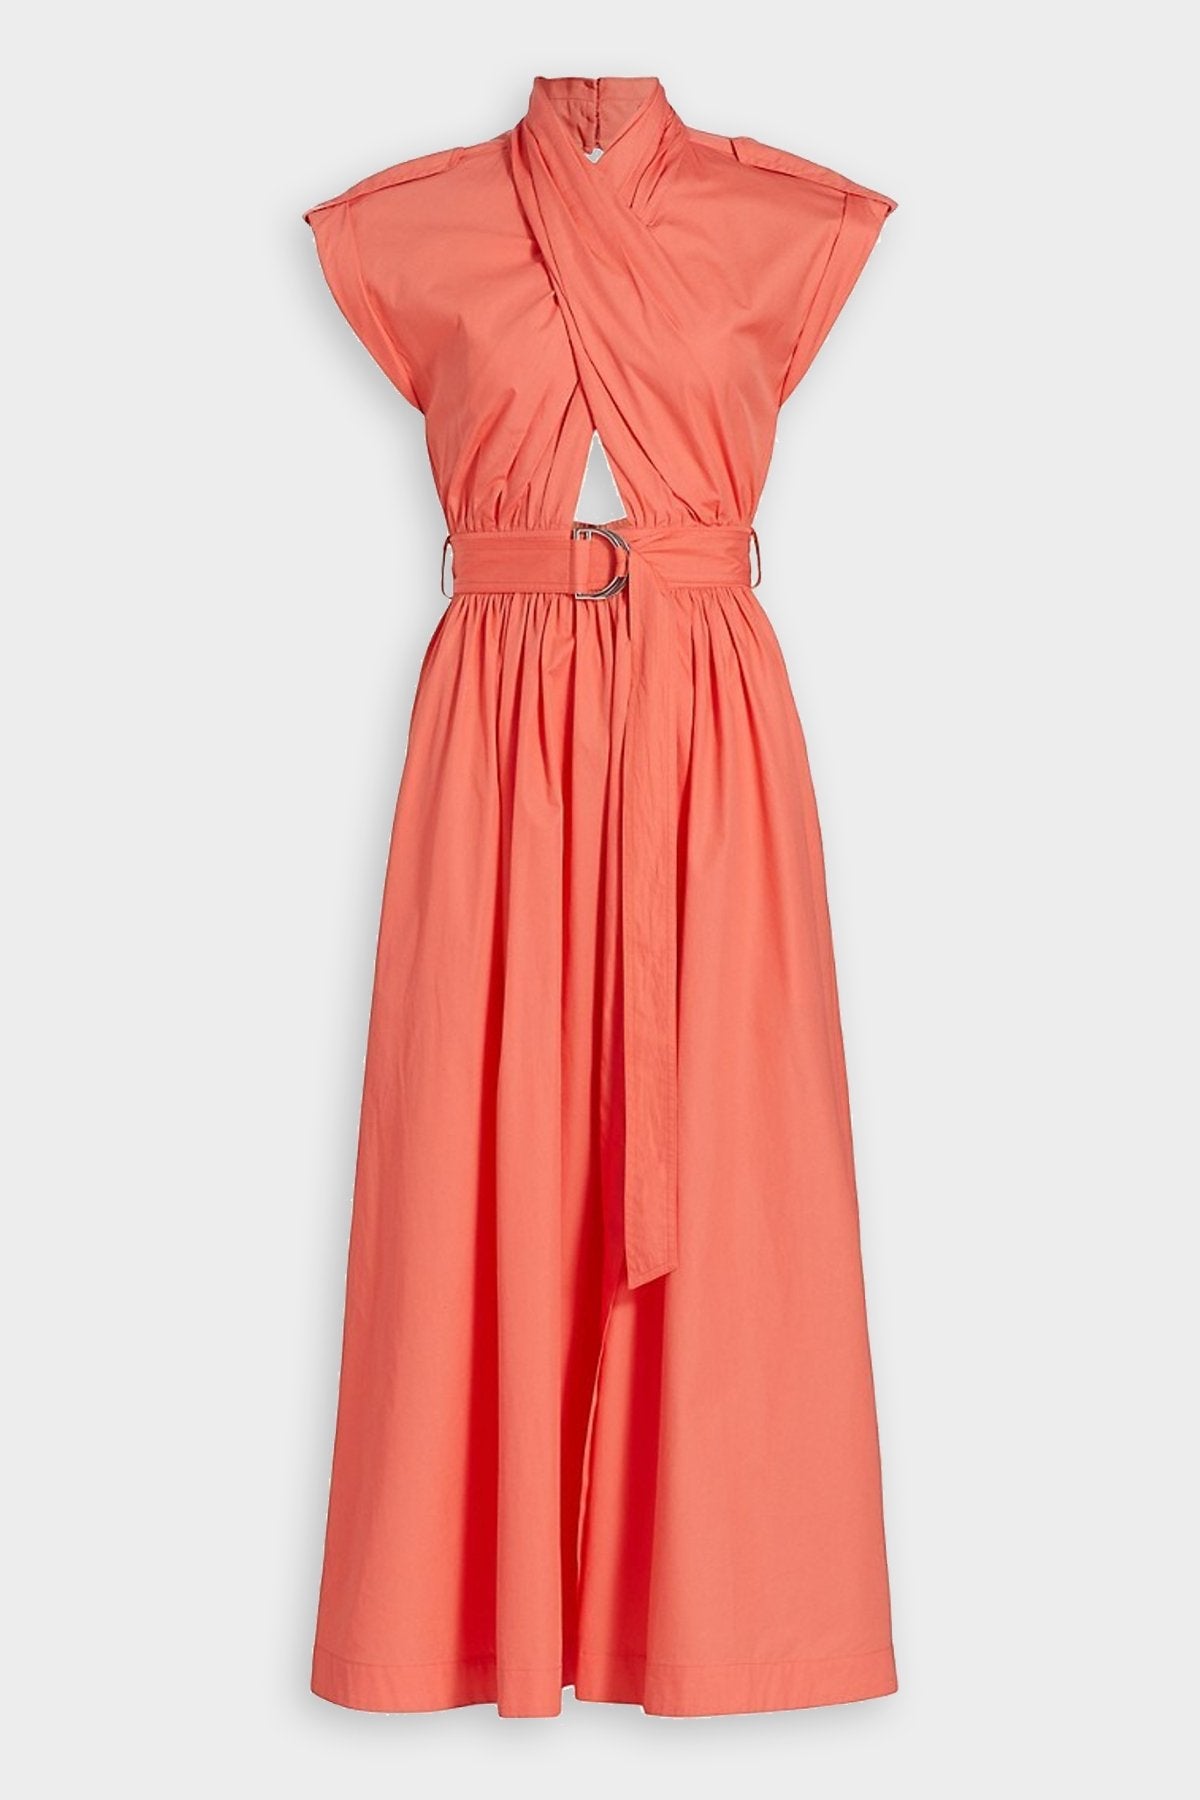 Celeste Wrap Dress in Coral - shop-olivia.com